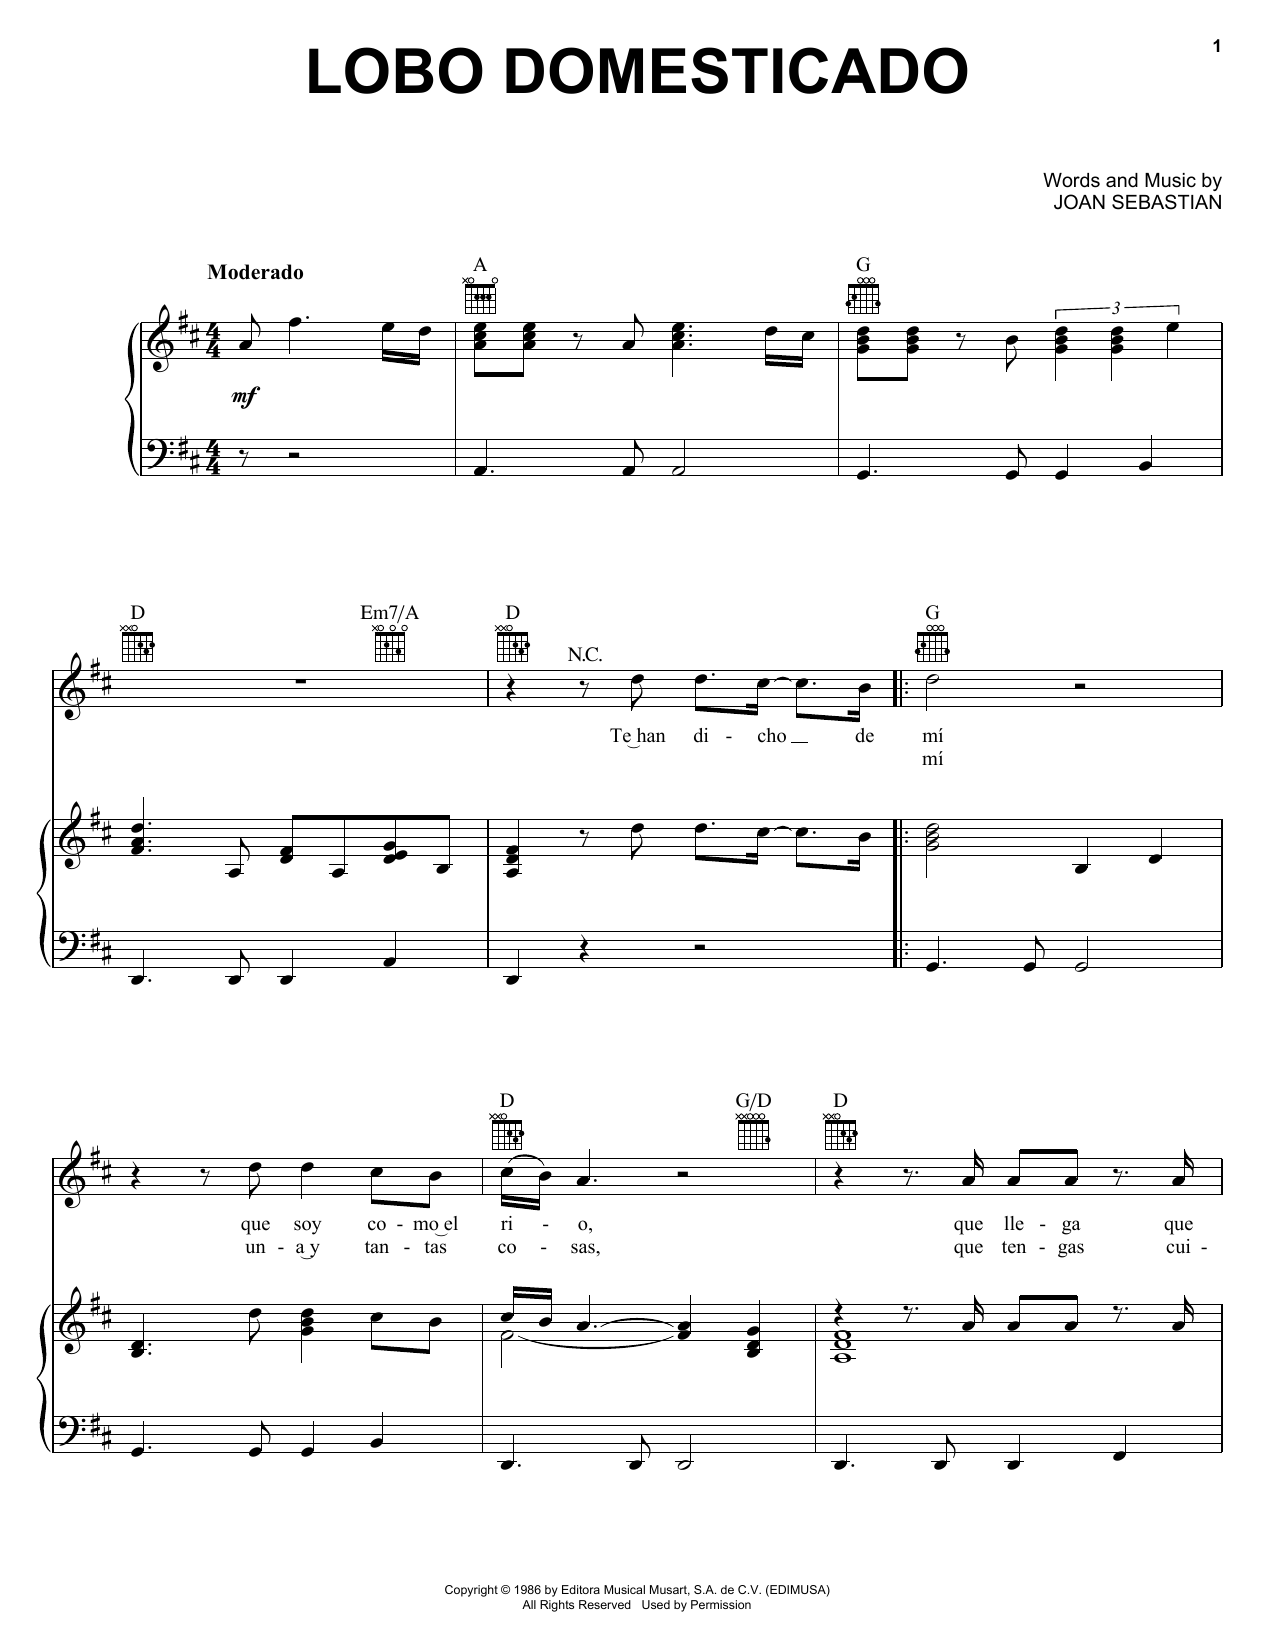 Joan Sebastian Lobo Domesticado Sheet Music Notes & Chords for Piano, Vocal & Guitar (Right-Hand Melody) - Download or Print PDF